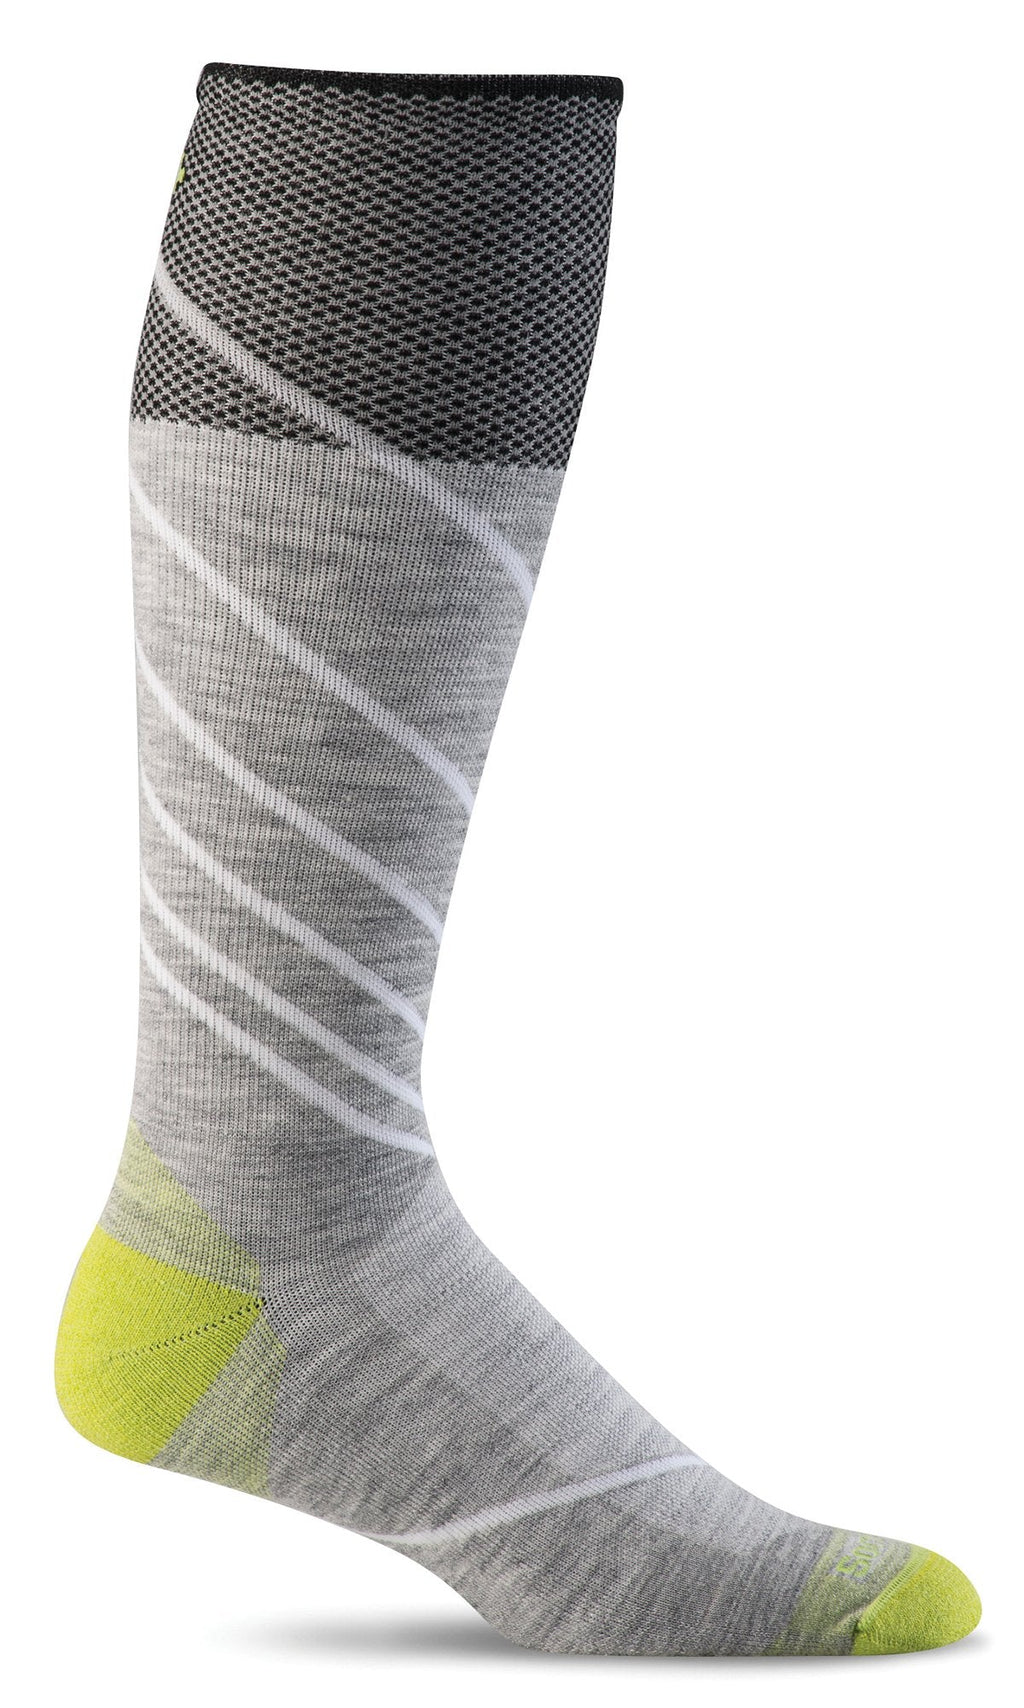 Men's Pulse OTC | Firm Graduated Compression Socks - Merino Wool Sport Compression - Sockwell